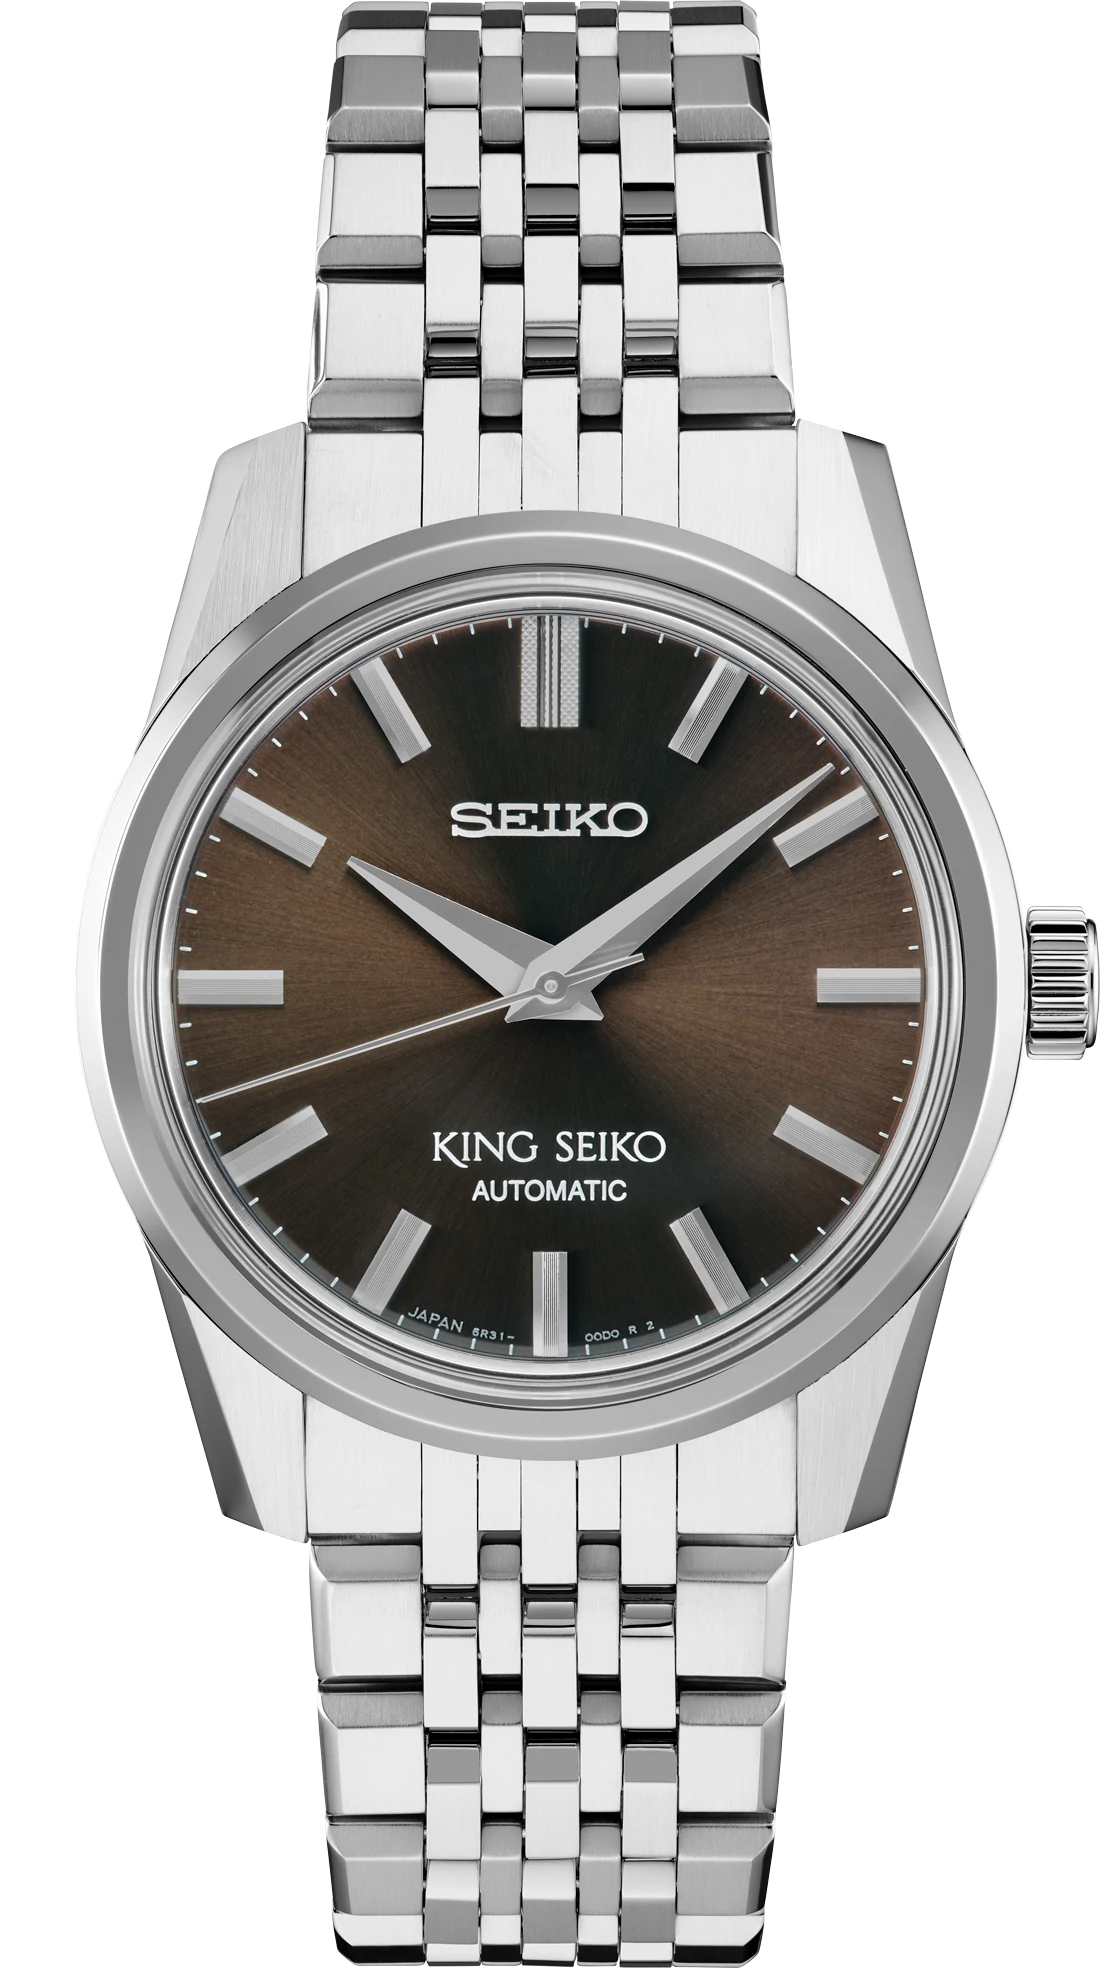 Seiko SPB285 King Seiko Modern Re-Interpretation Brown Dial Watch